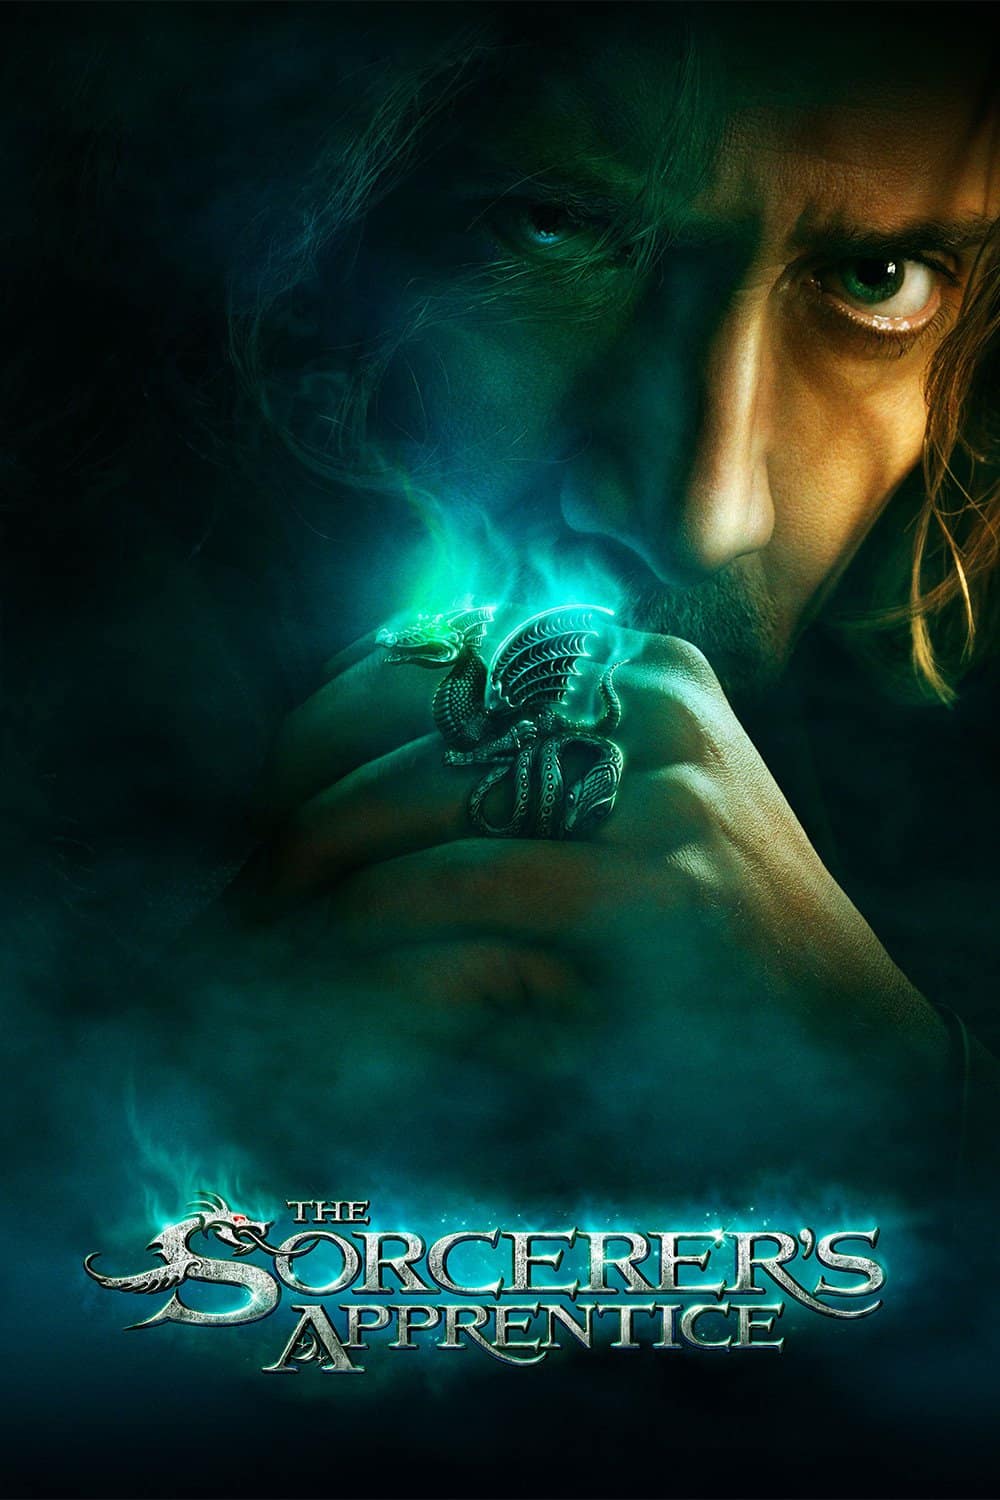 The Sorcerer's Apprentice, 2010 